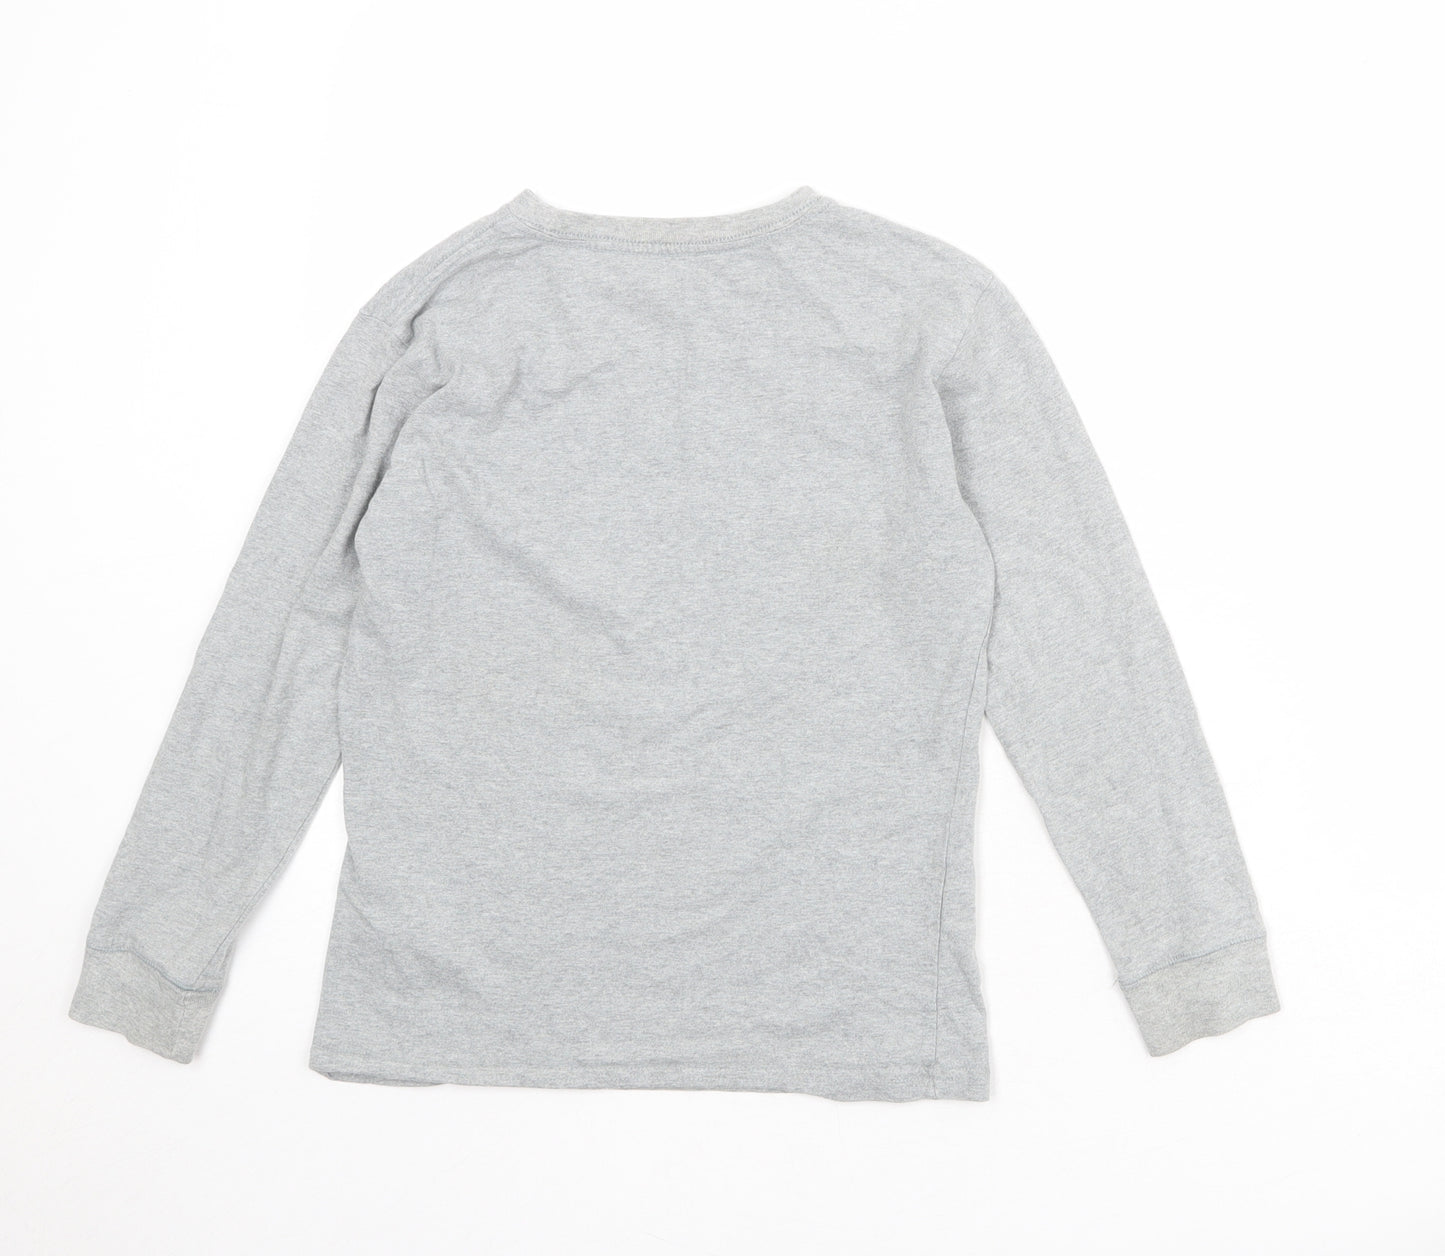 Gap Boys Grey 100% Cotton Basic T-Shirt Size 8-9 Years Round Neck Pullover